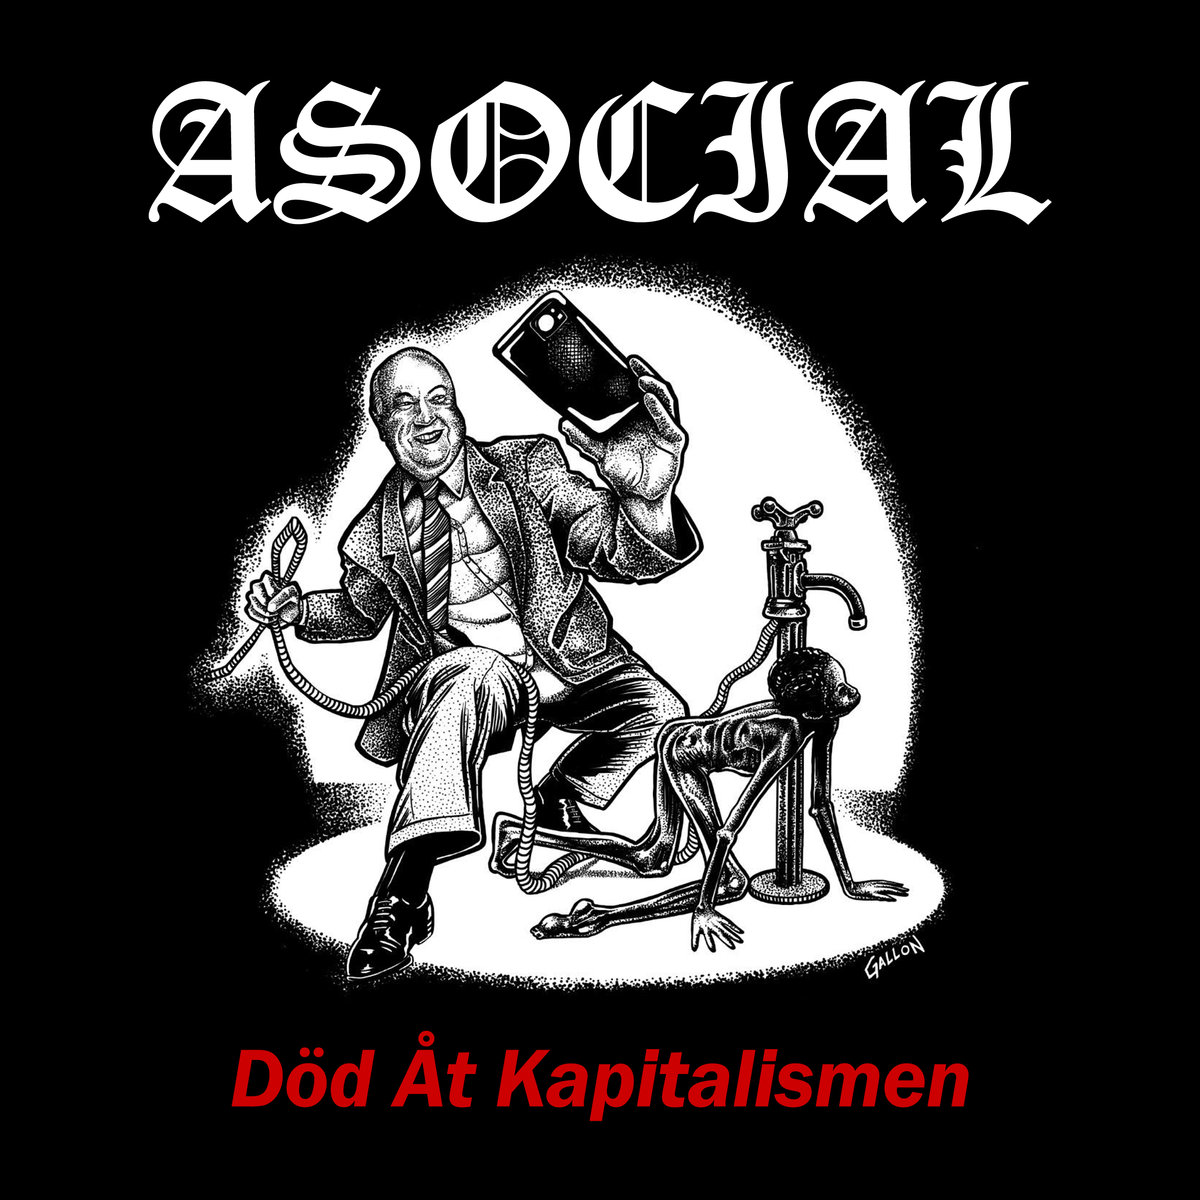 Asocial---Dod-At-Kapitalismen---LP